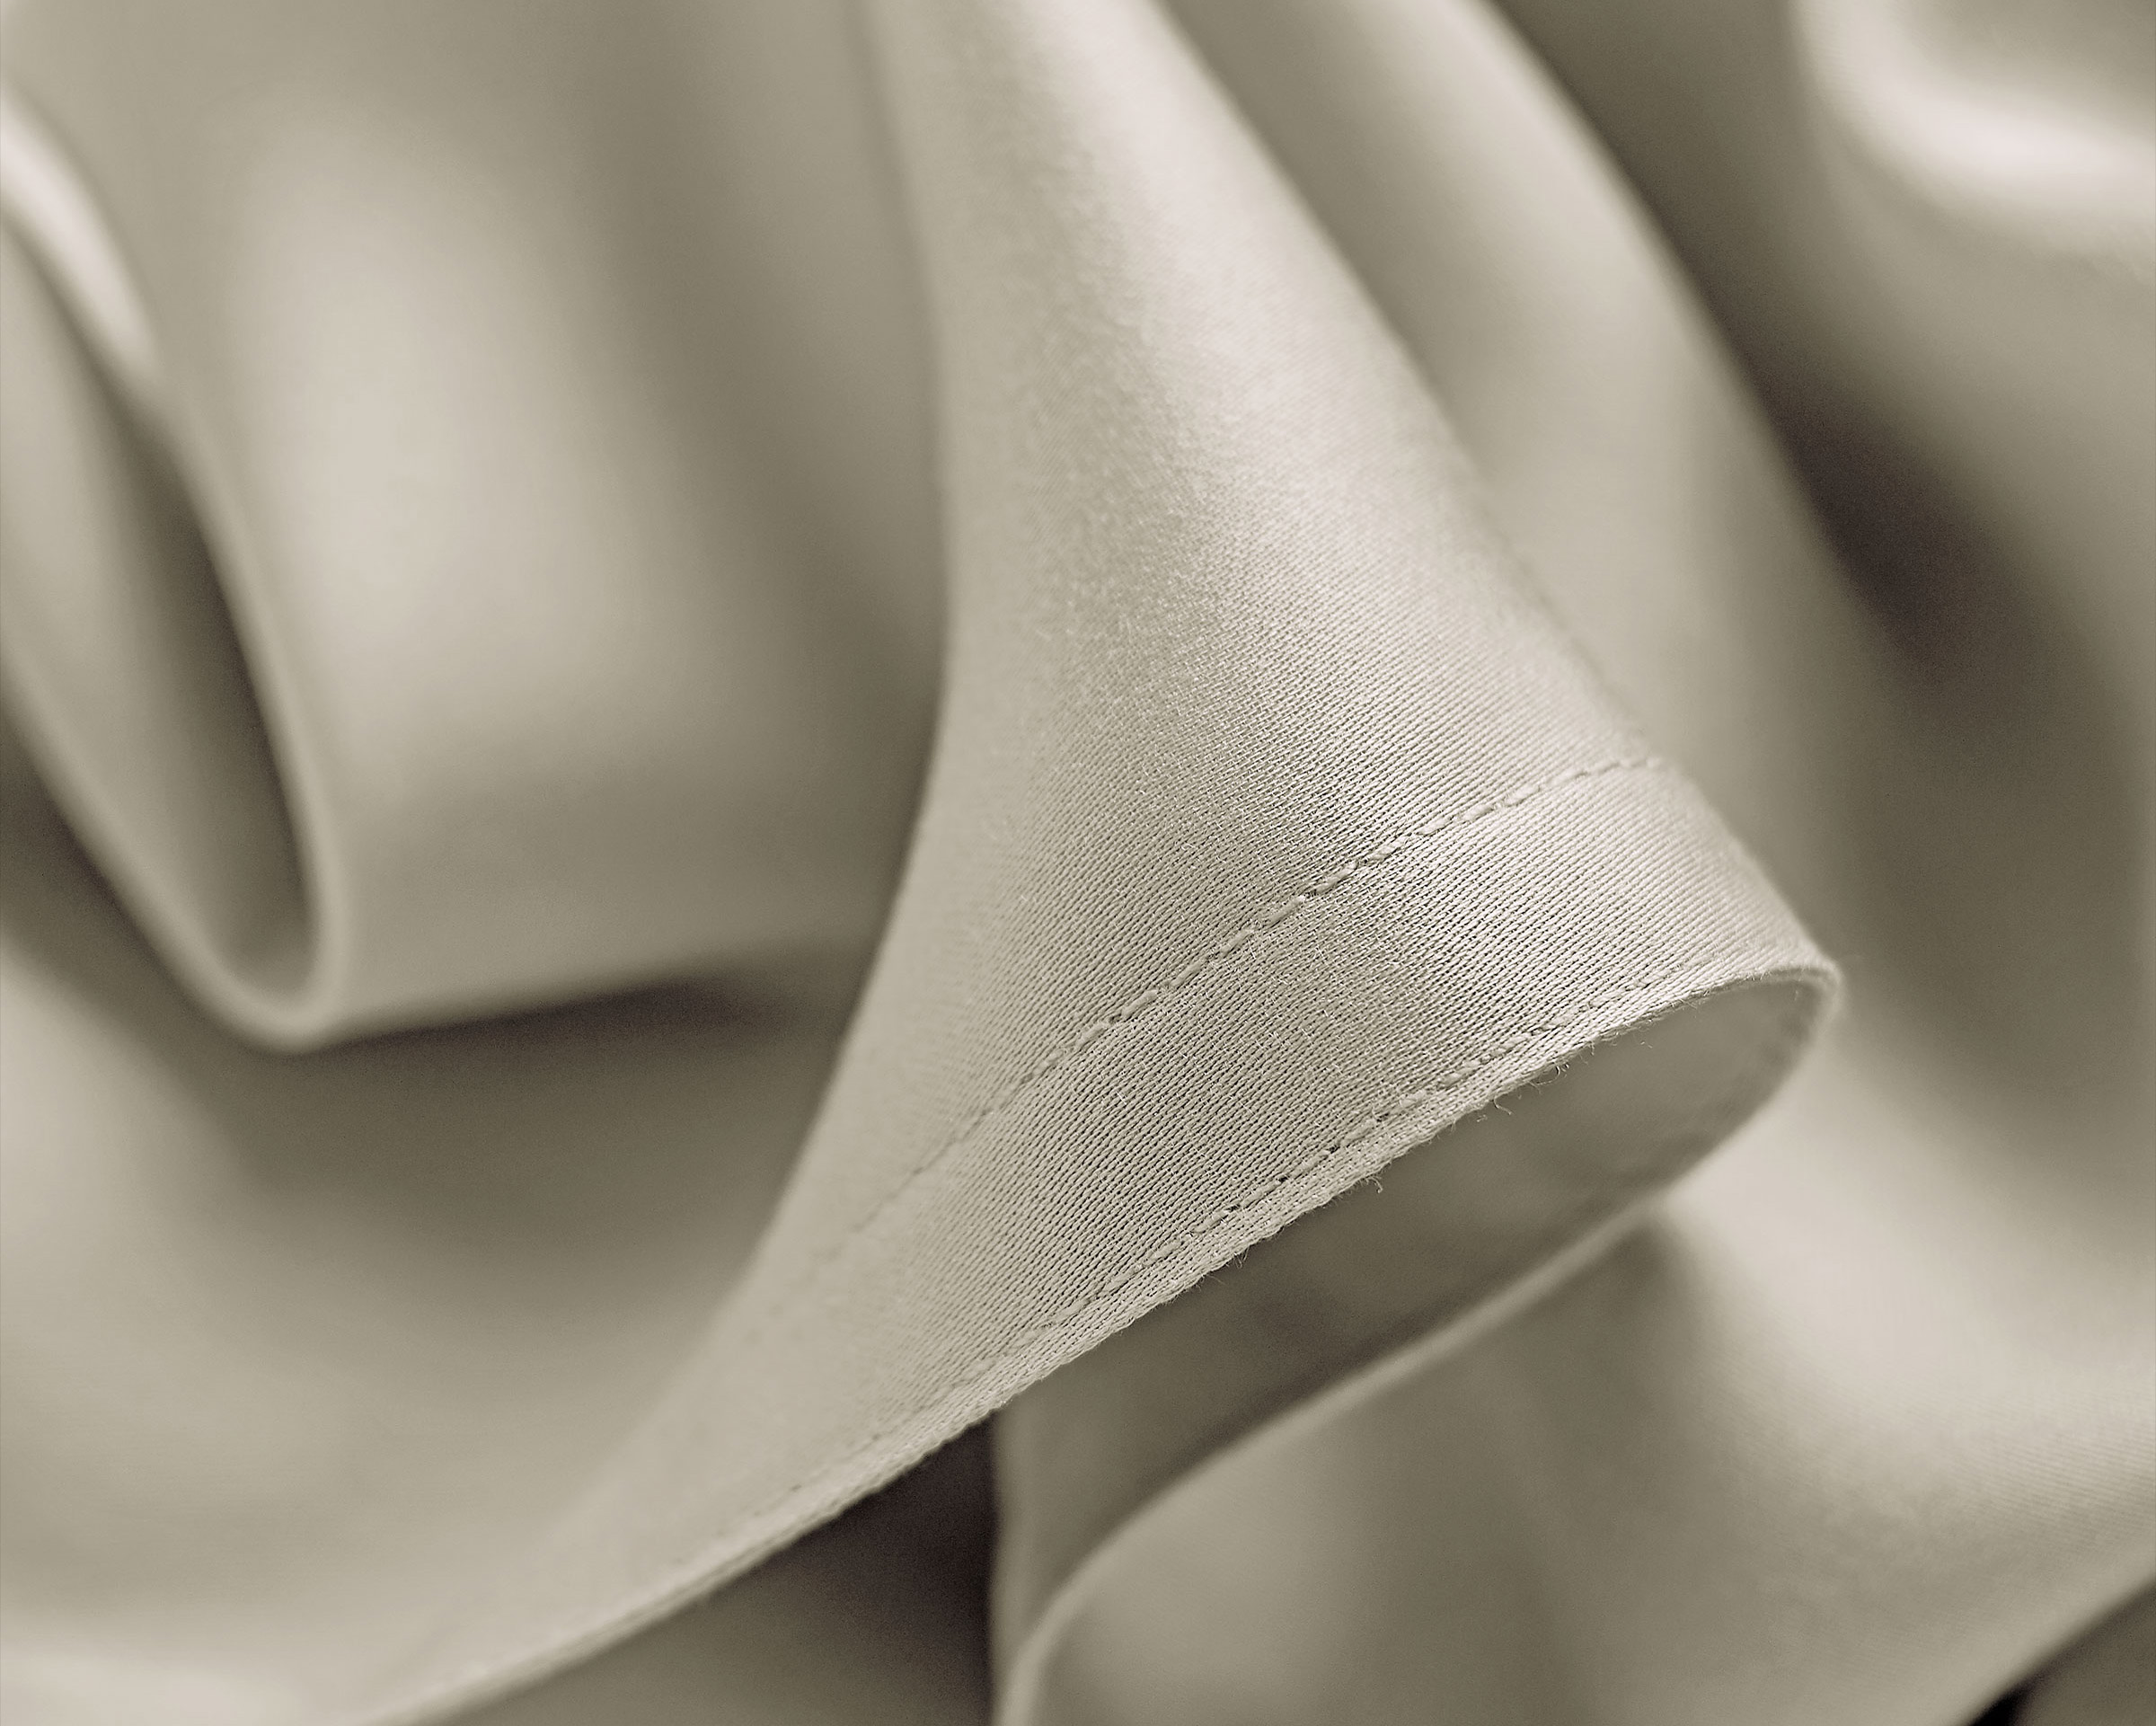 STYLINEN - 100% Organic Pure Eucalyptus Tencel Sheets Soft & Breathable